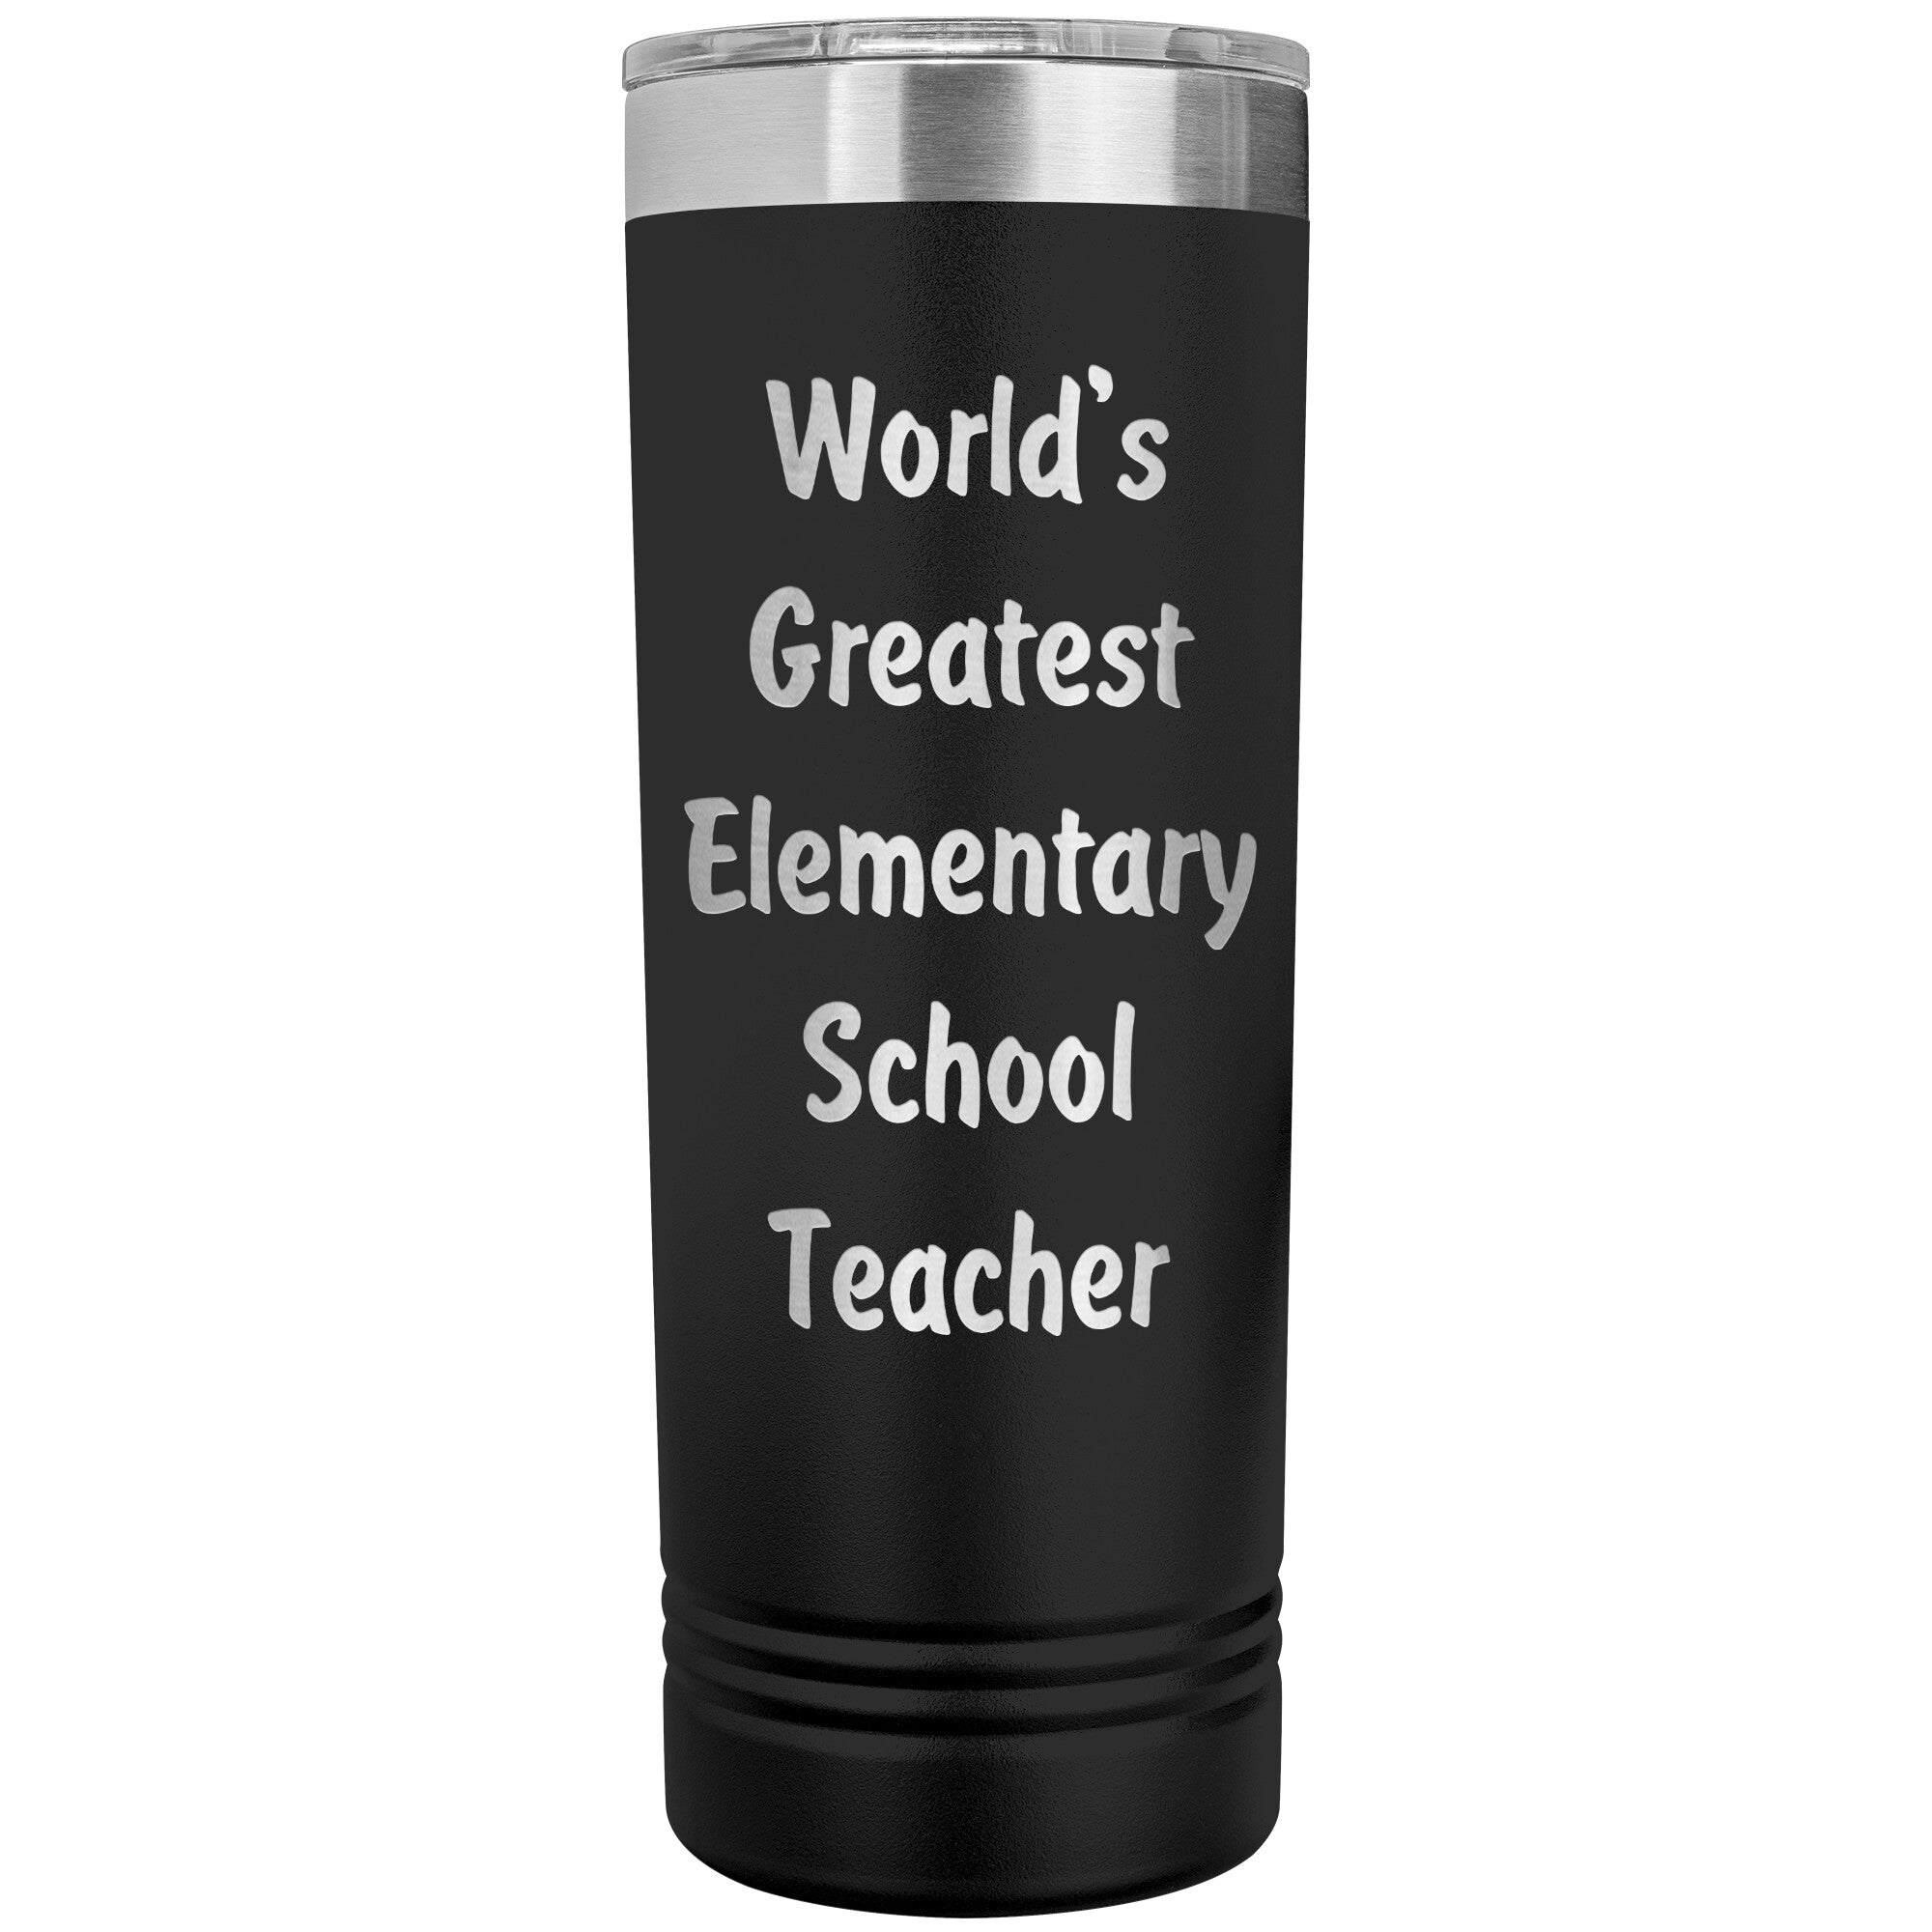 World's Greatest Elementary School Teacher - 22oz Insulated Skinny Tumbler